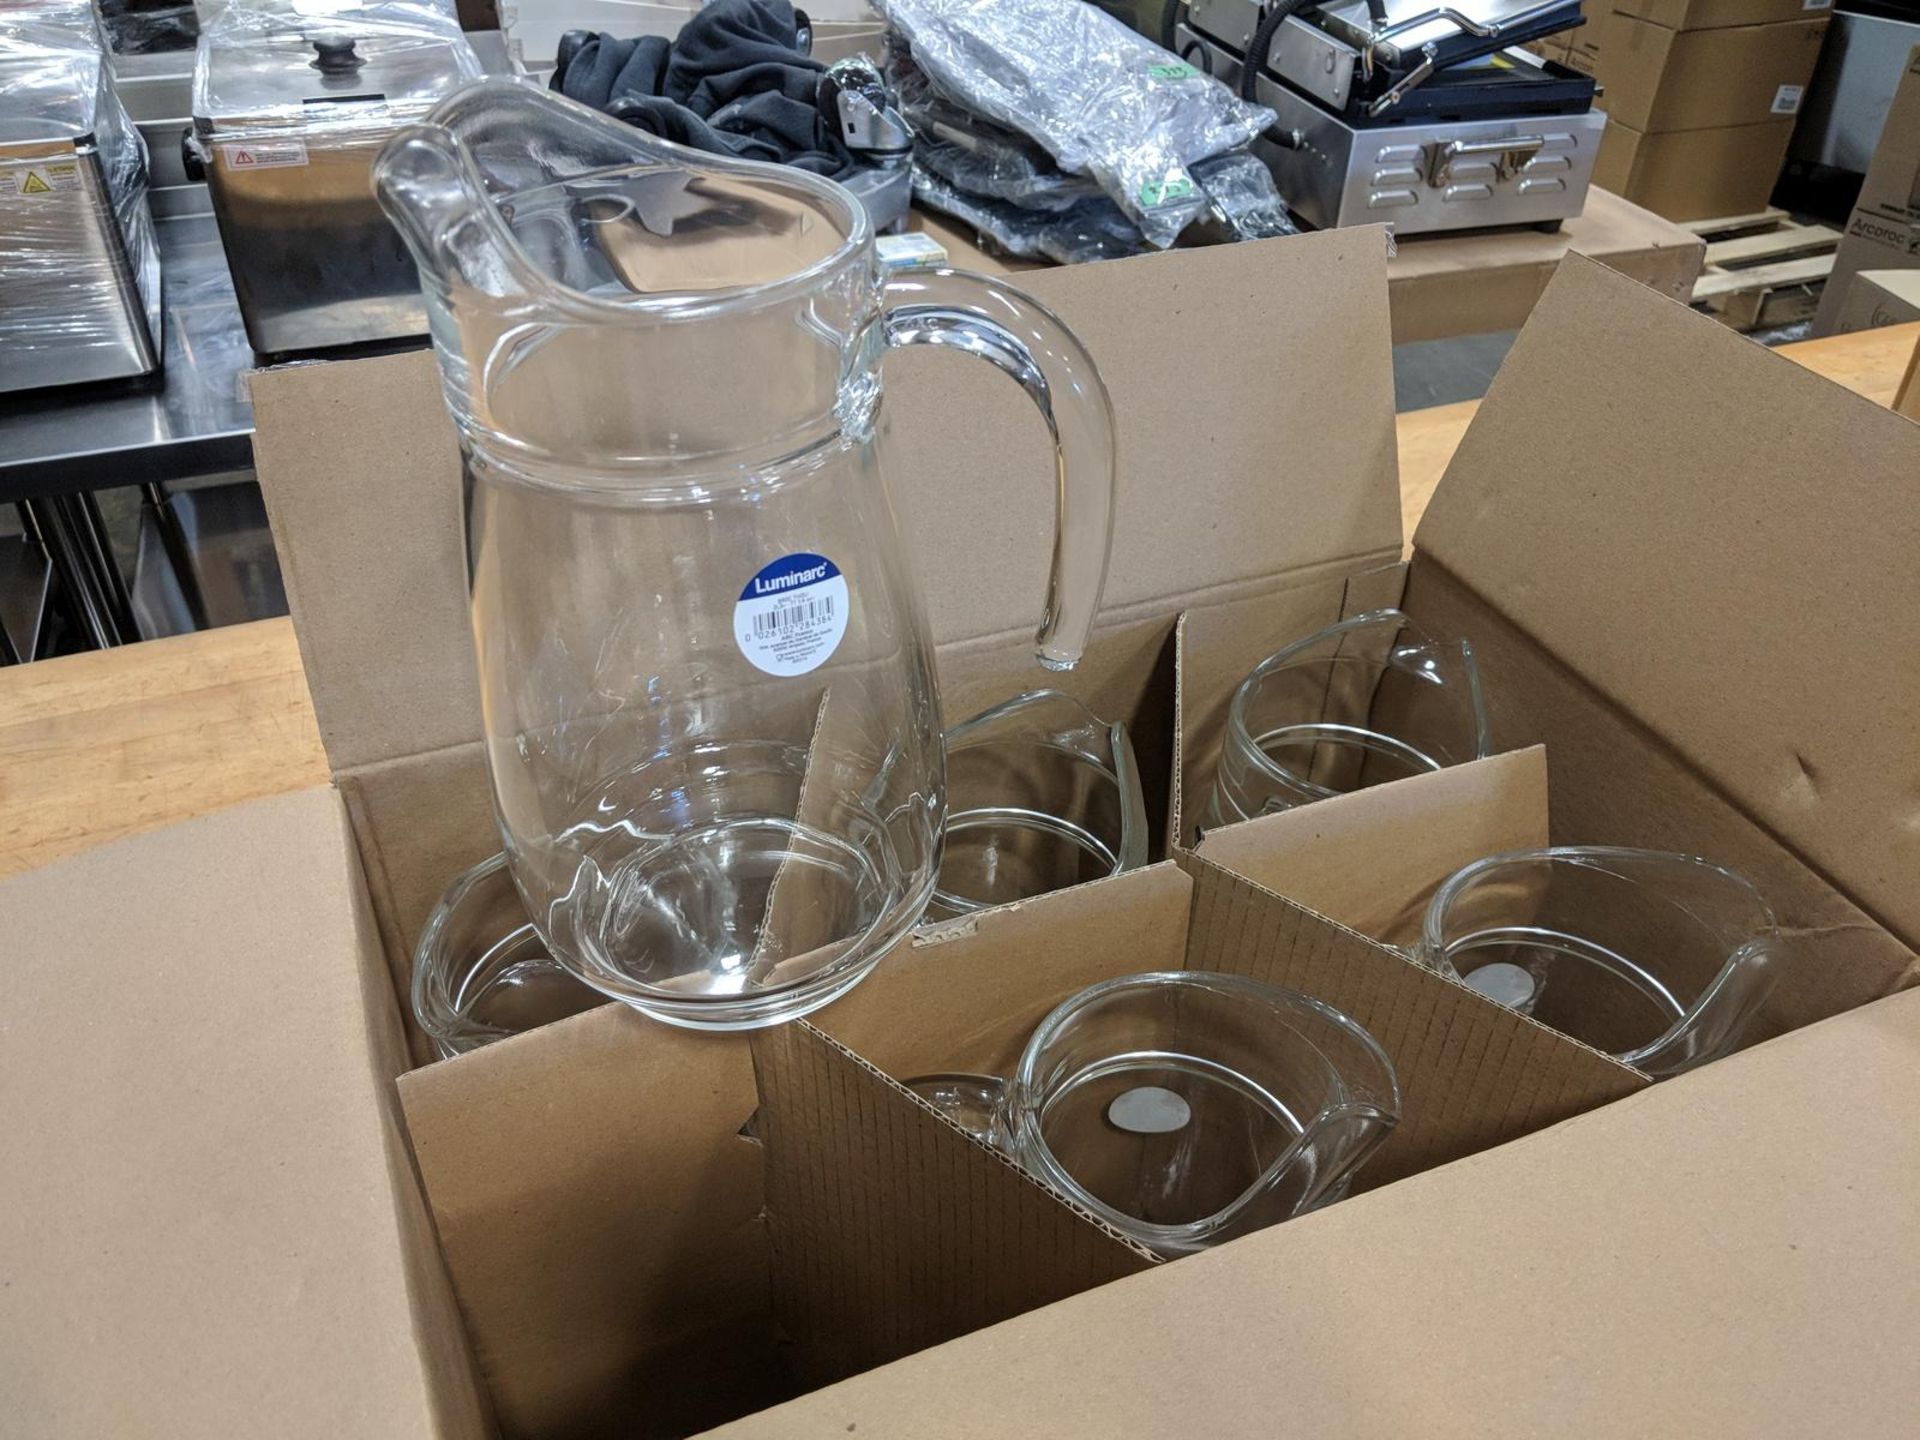 77.5oz/2.3L Tivoli Glass Pitchers - Lot of 6 (1 case), Luminarc 28438